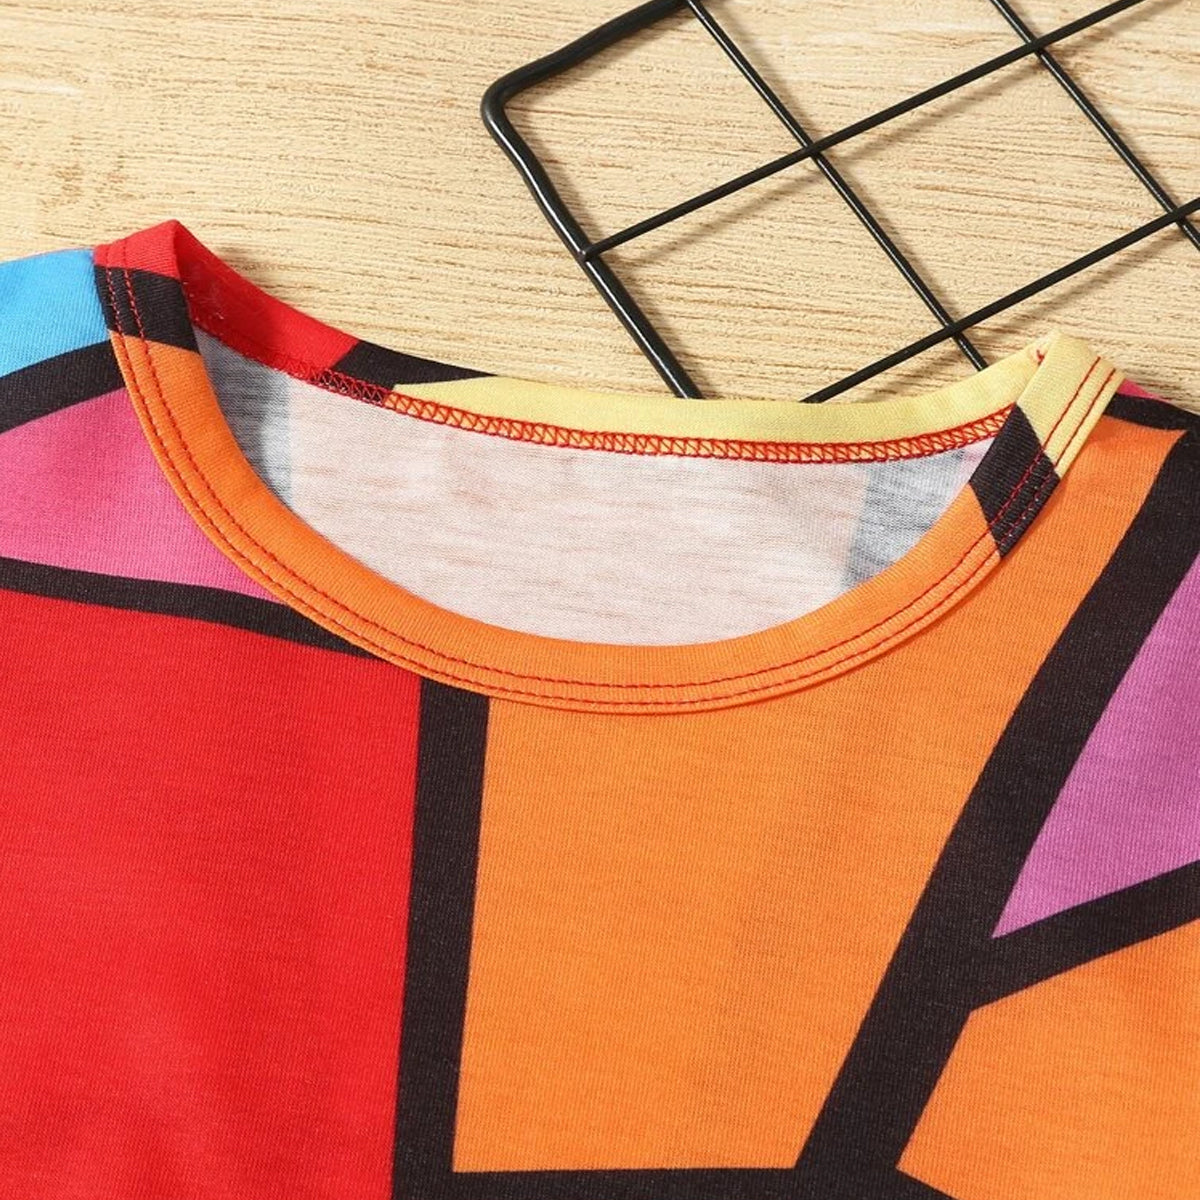 Venutaloza Plus Color Block T-Shirt For Boy's & Girl's..